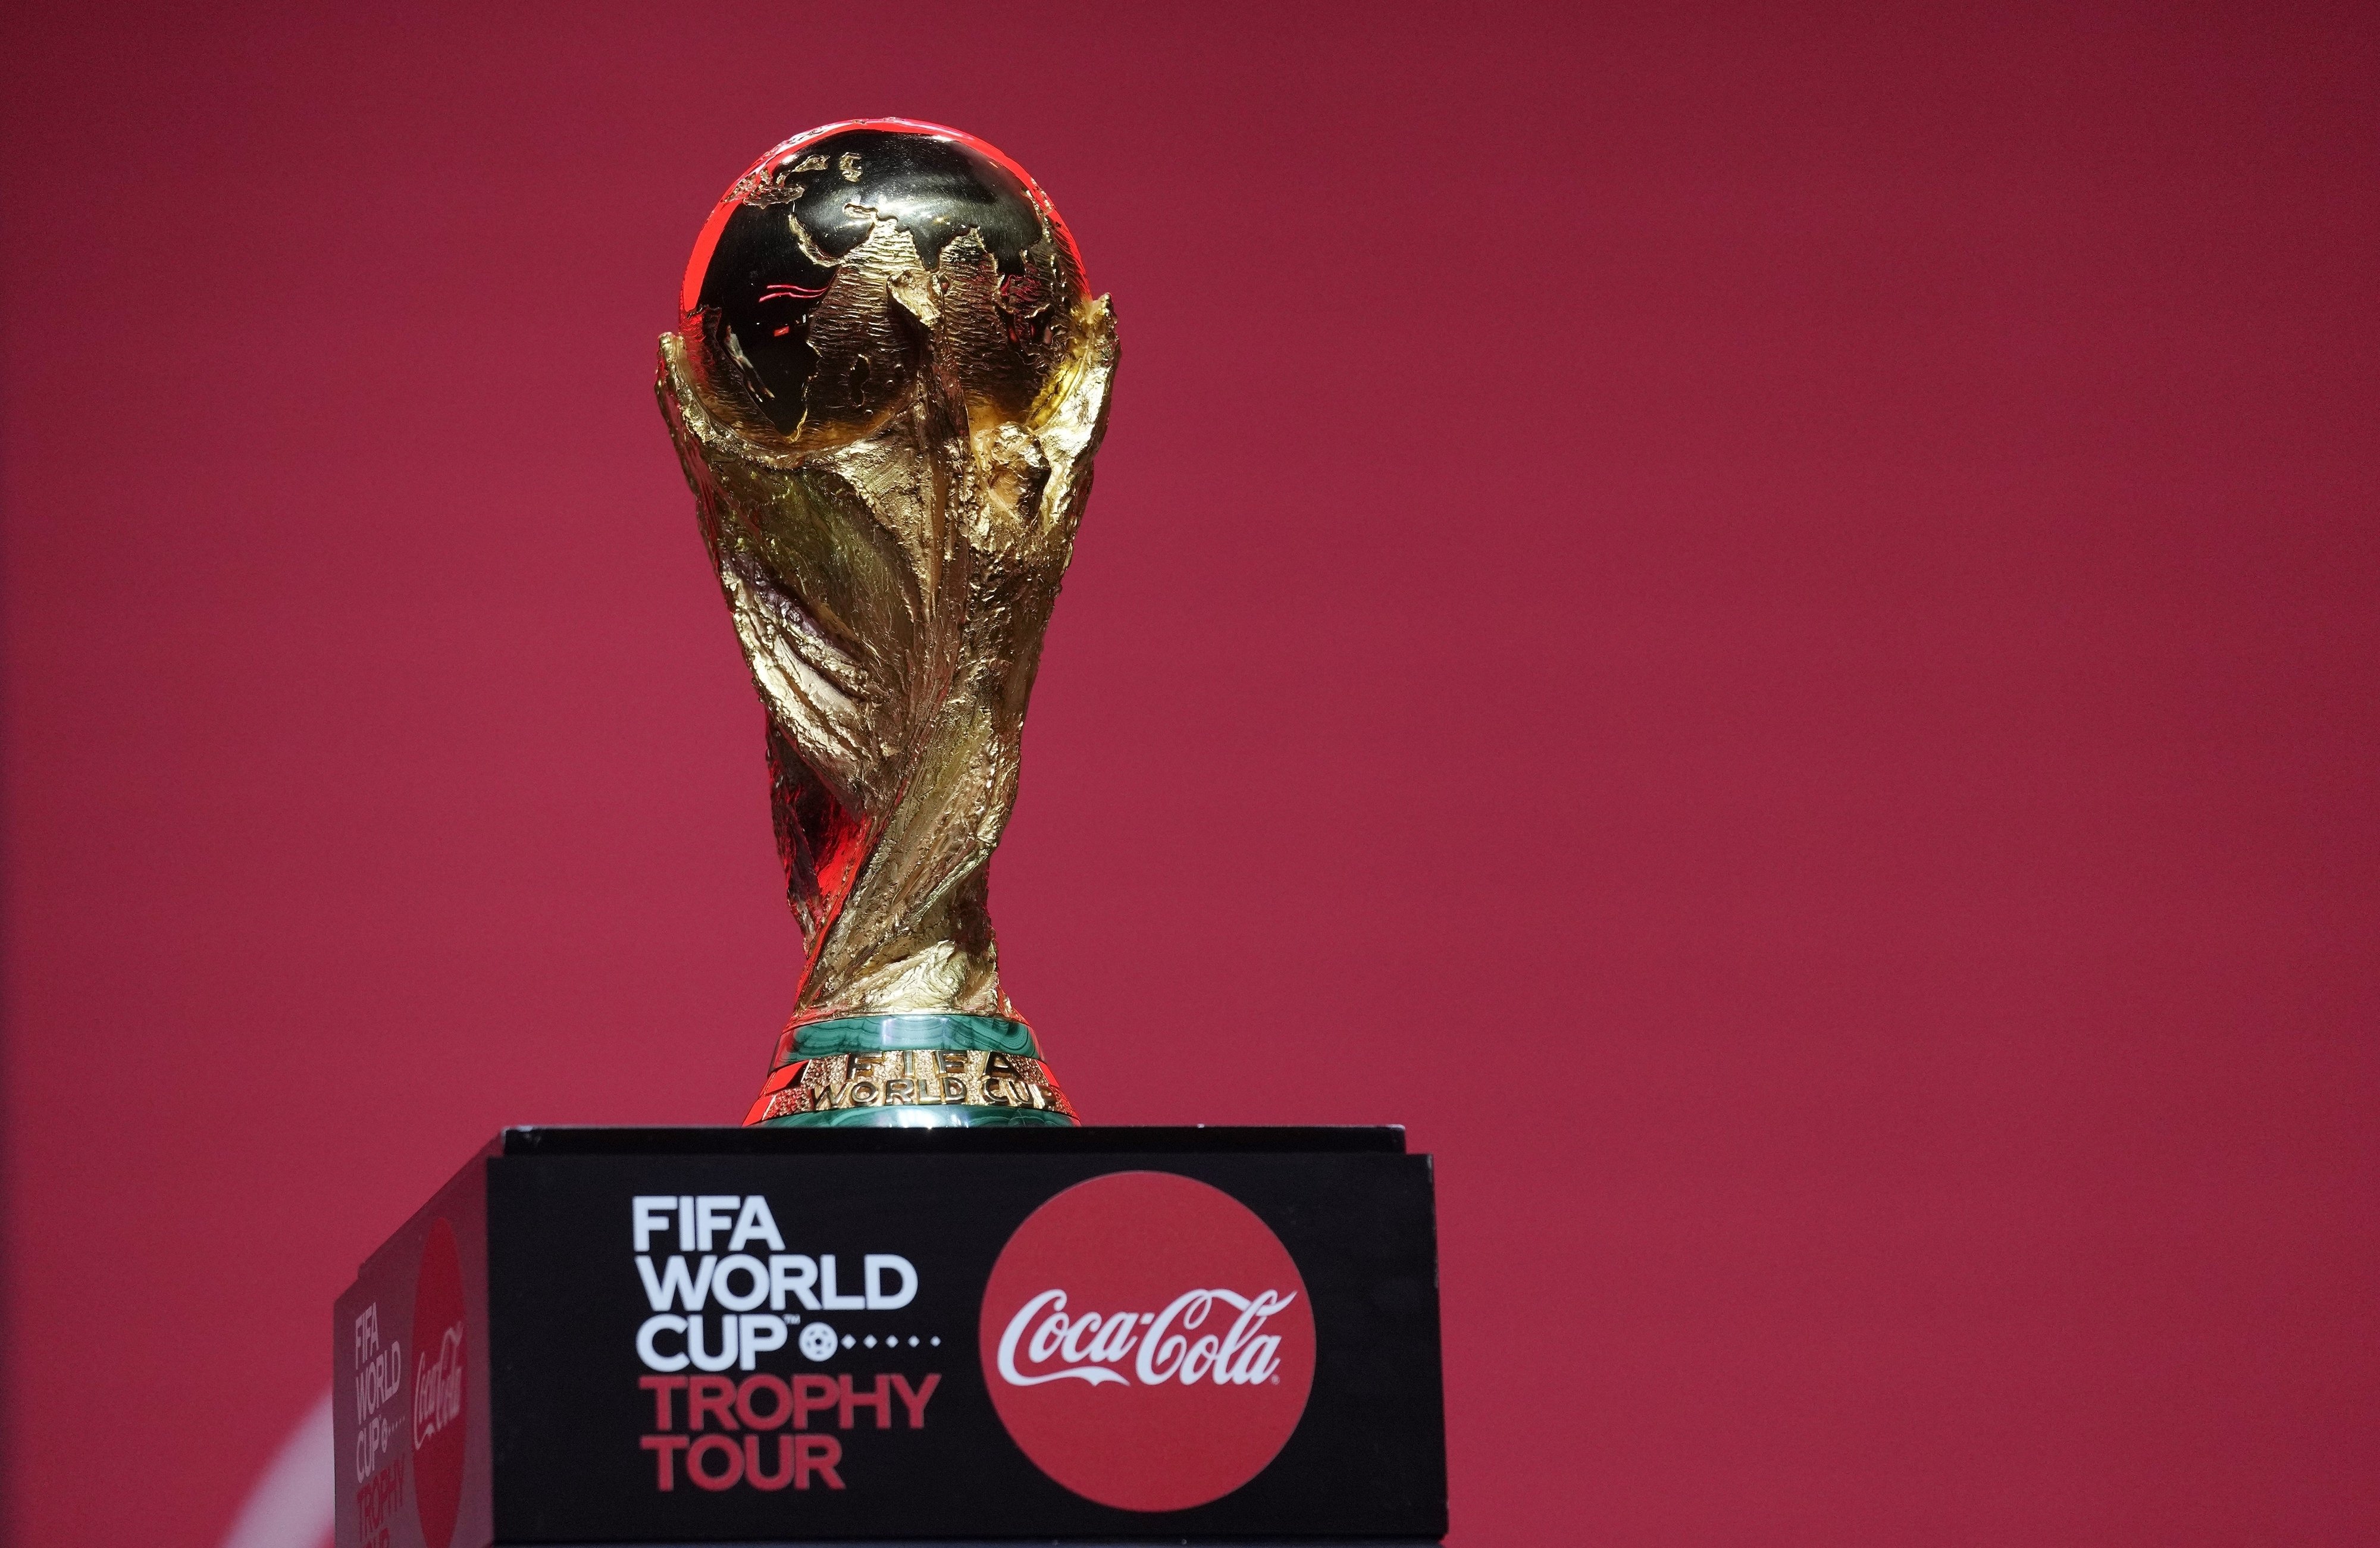 The Qatar FIFA World Cup trophy is on display in Dubai, UAE, May 12, 2022. (AP Photo)